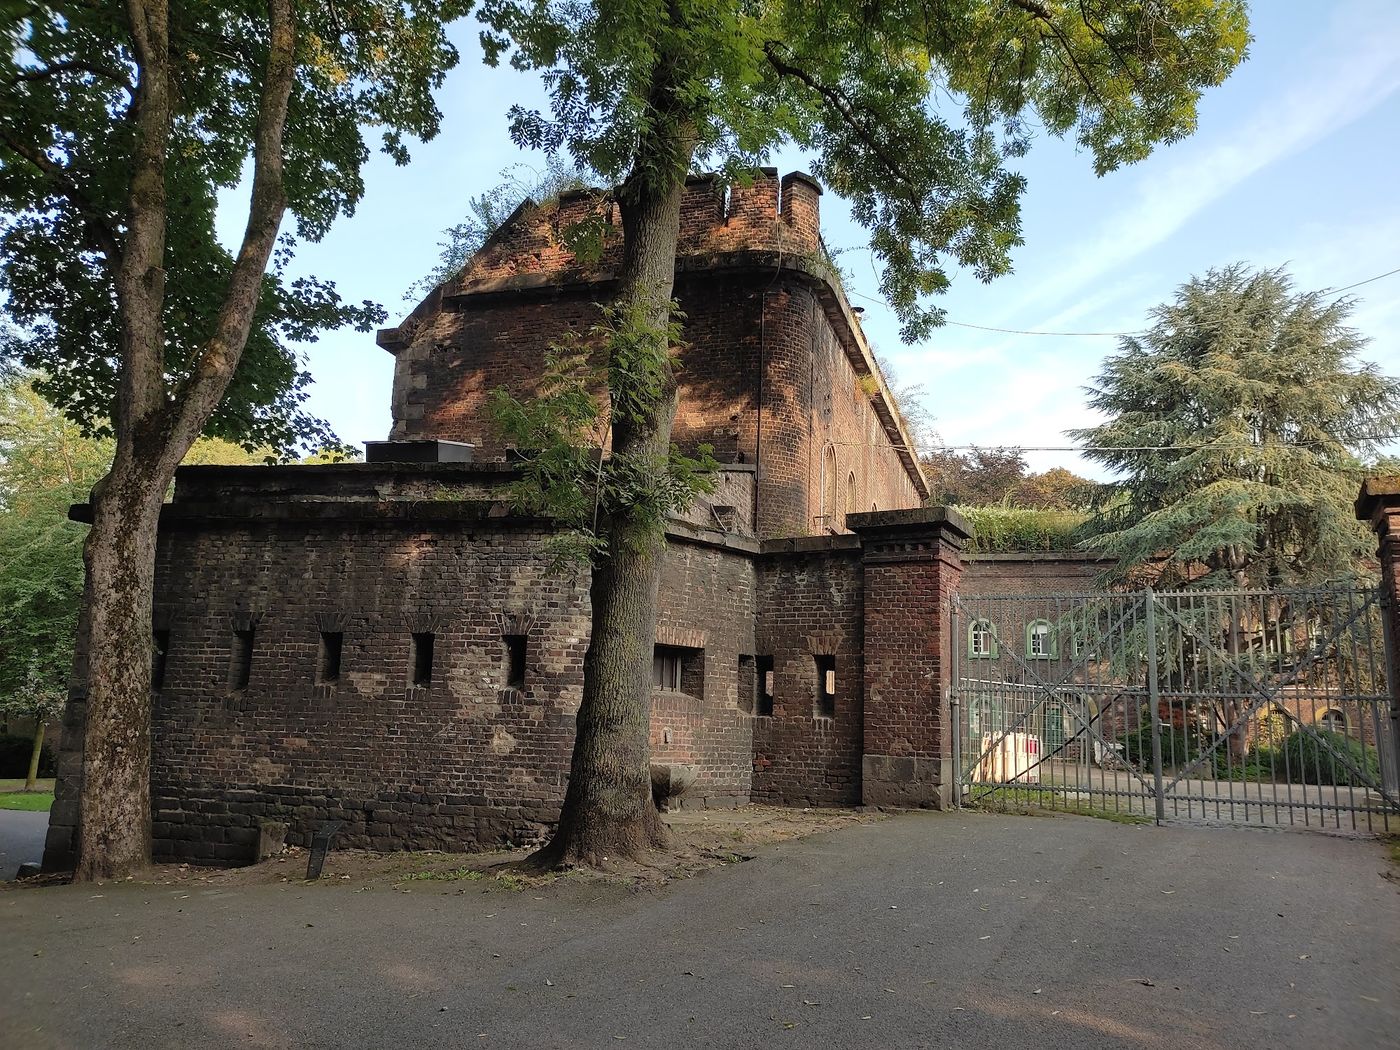 Blühendes Rosenmeer in historischer Festung